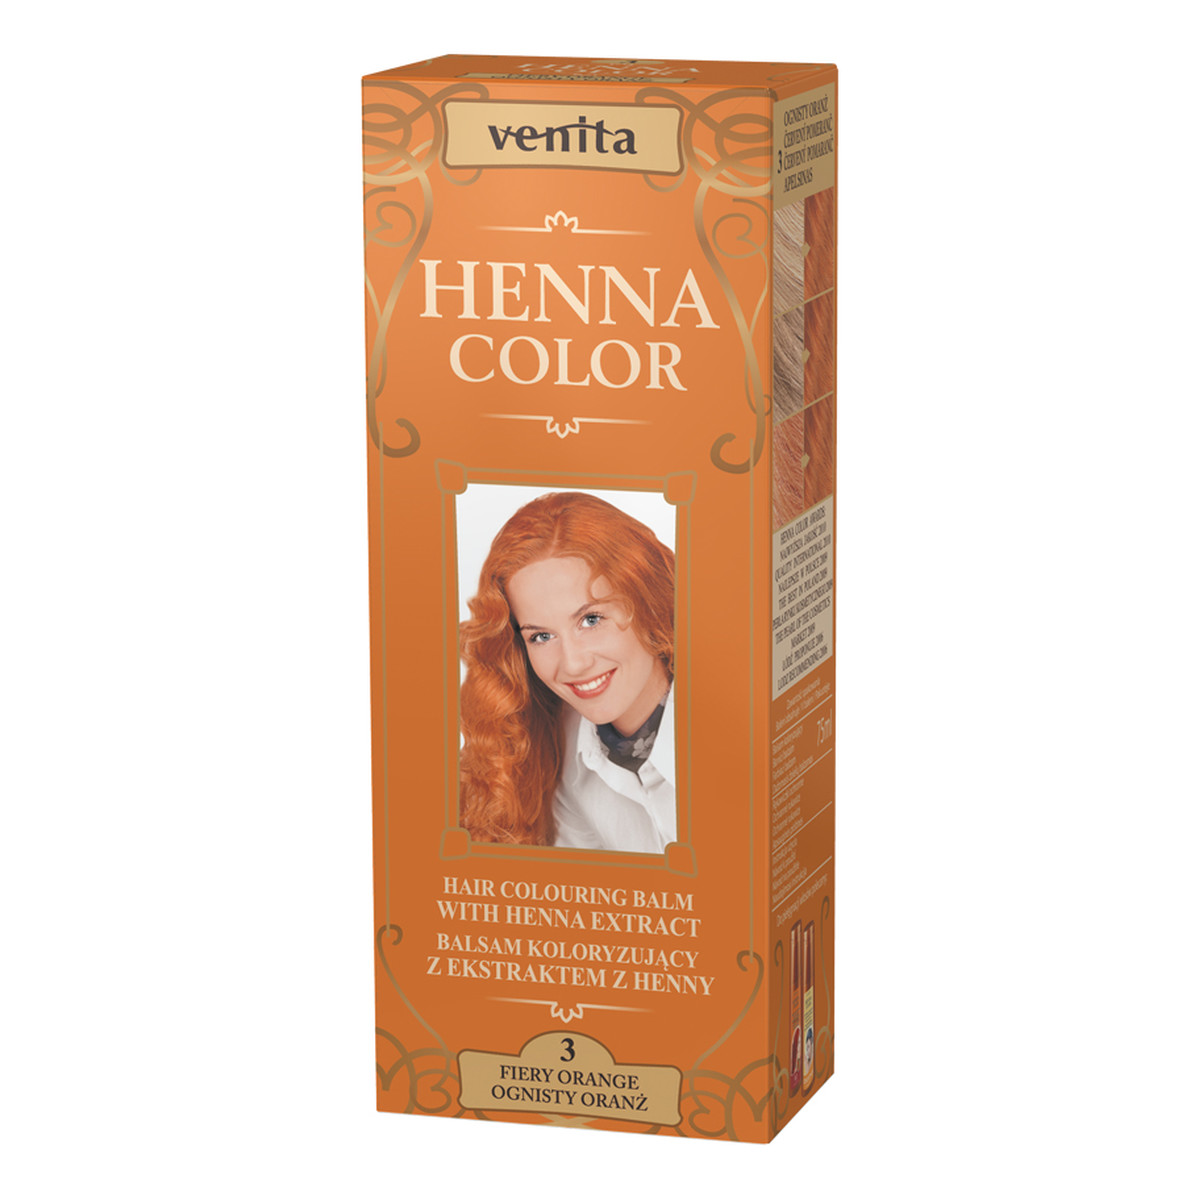 Venita HENNA COLOR Balsam koloryzujący z ekstraktem z henny TUBA 75ml